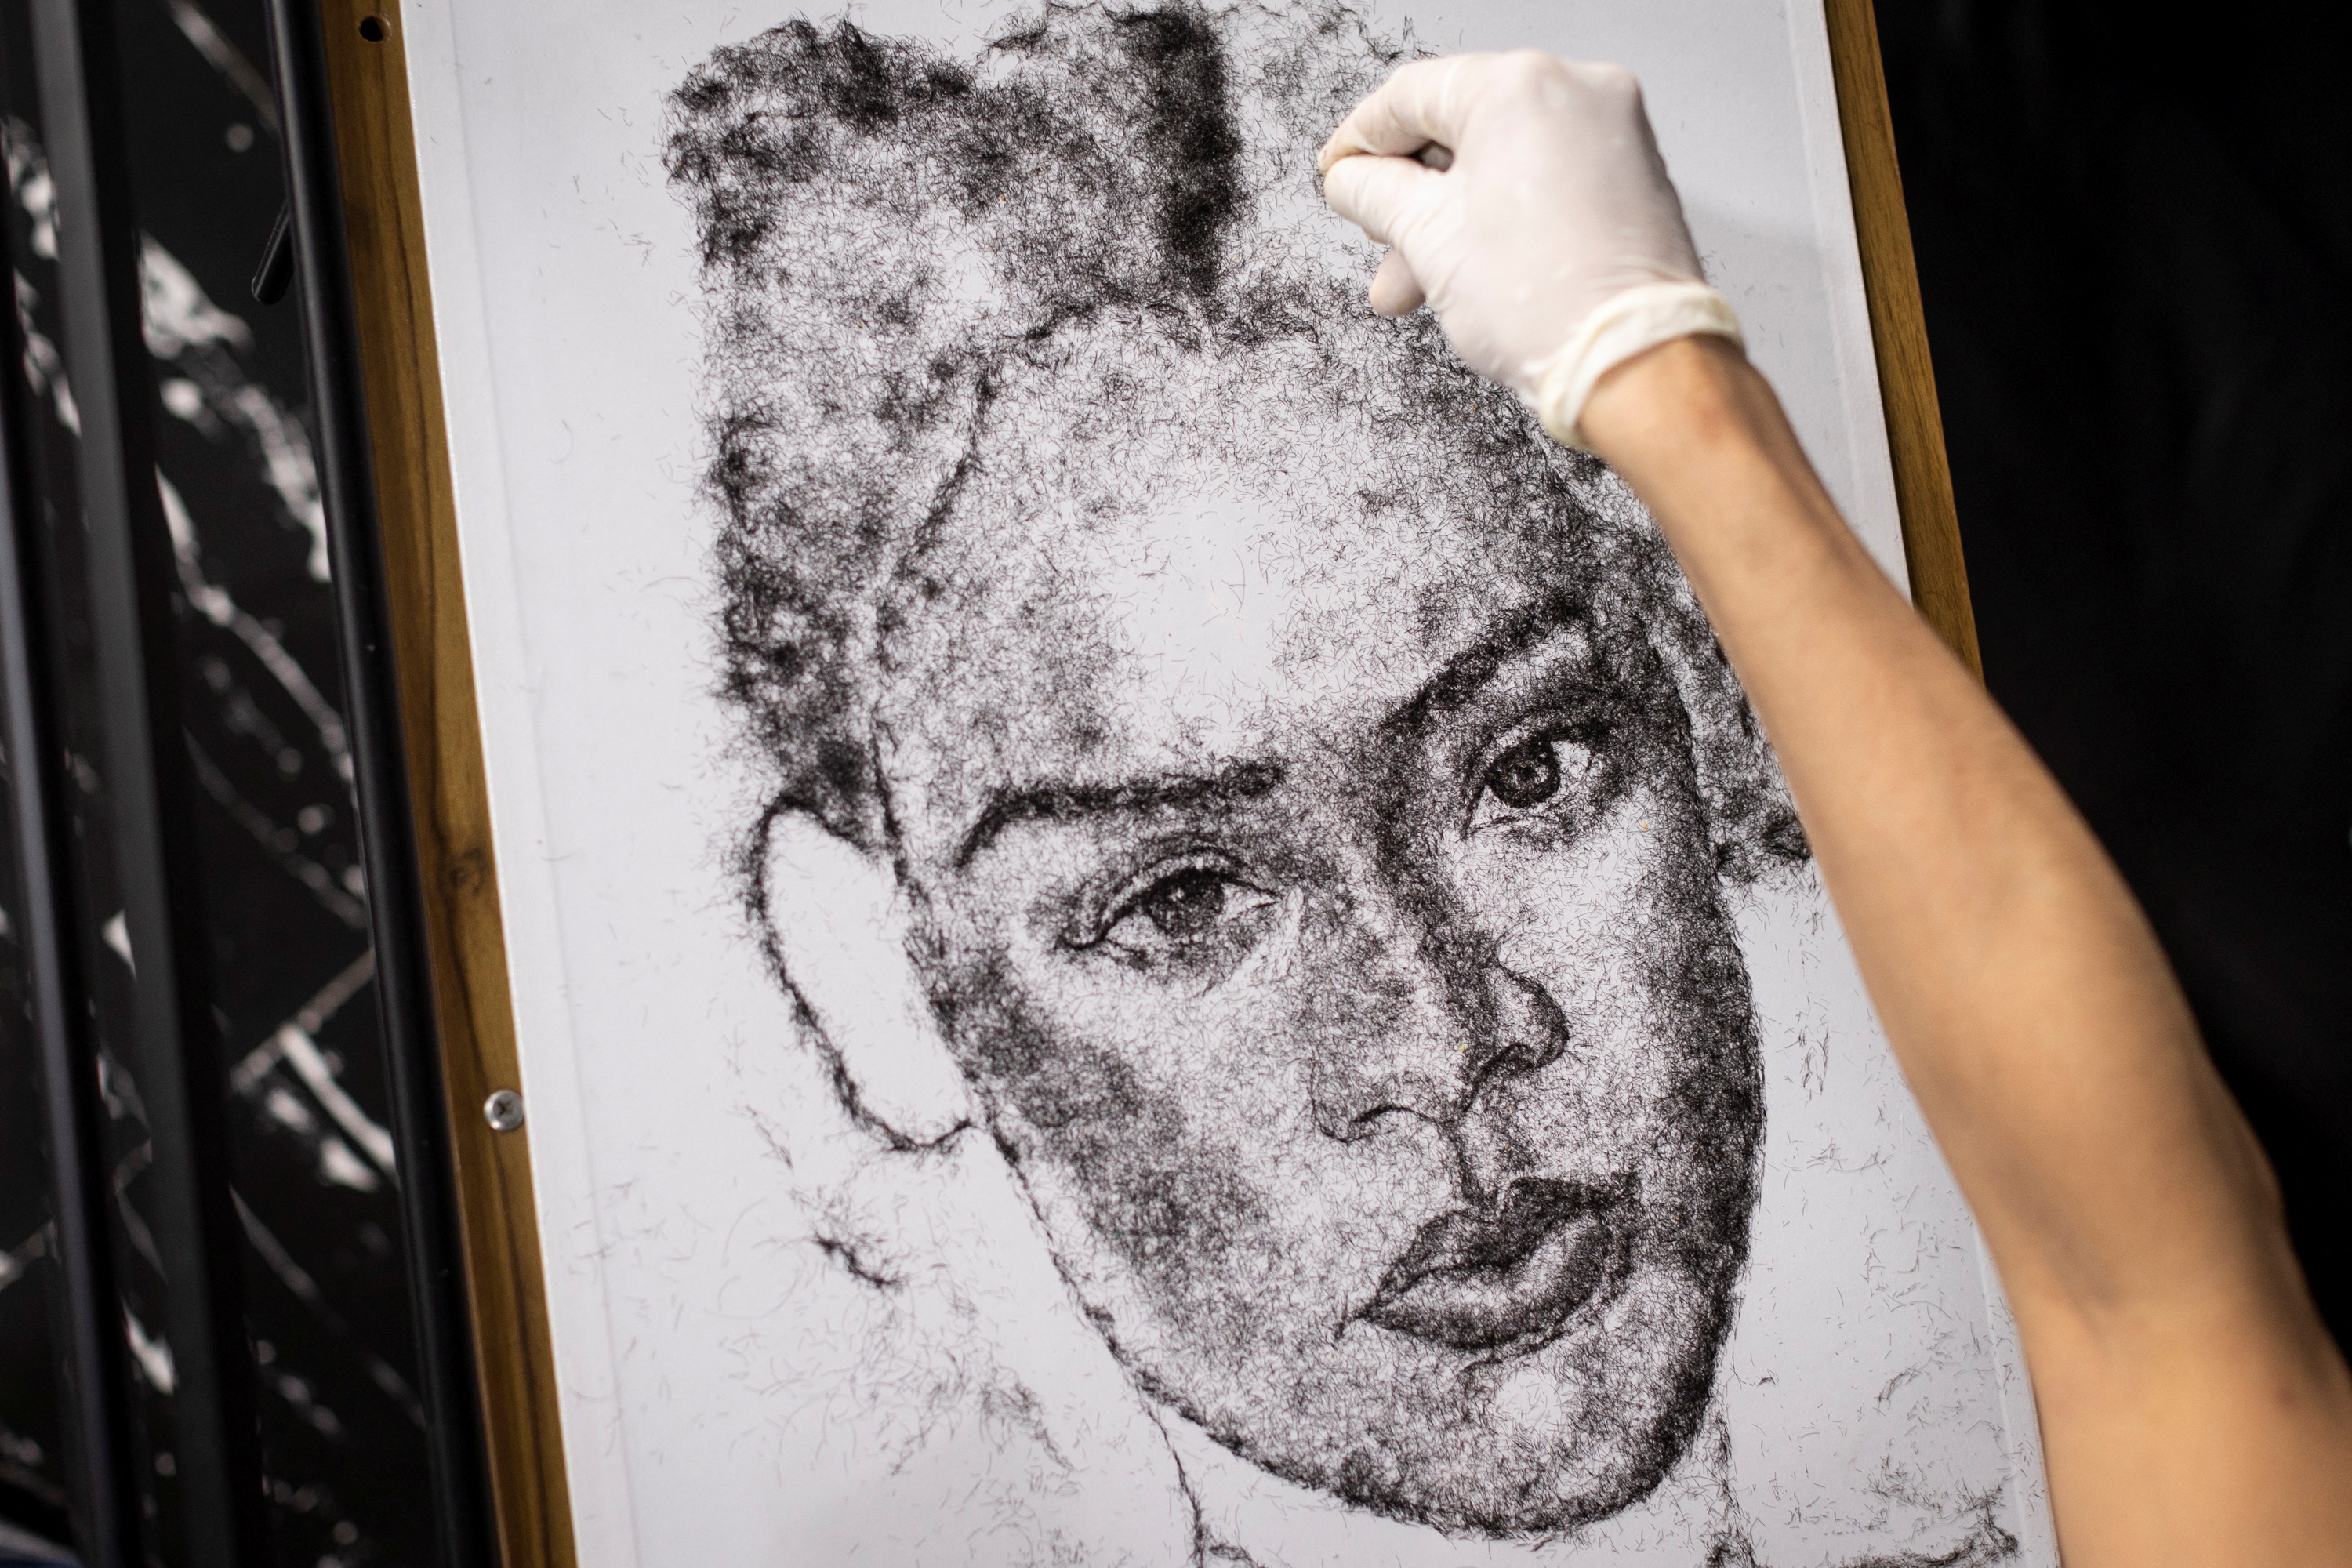 A hairy idea: Filipino artist uses own hair to create portraits